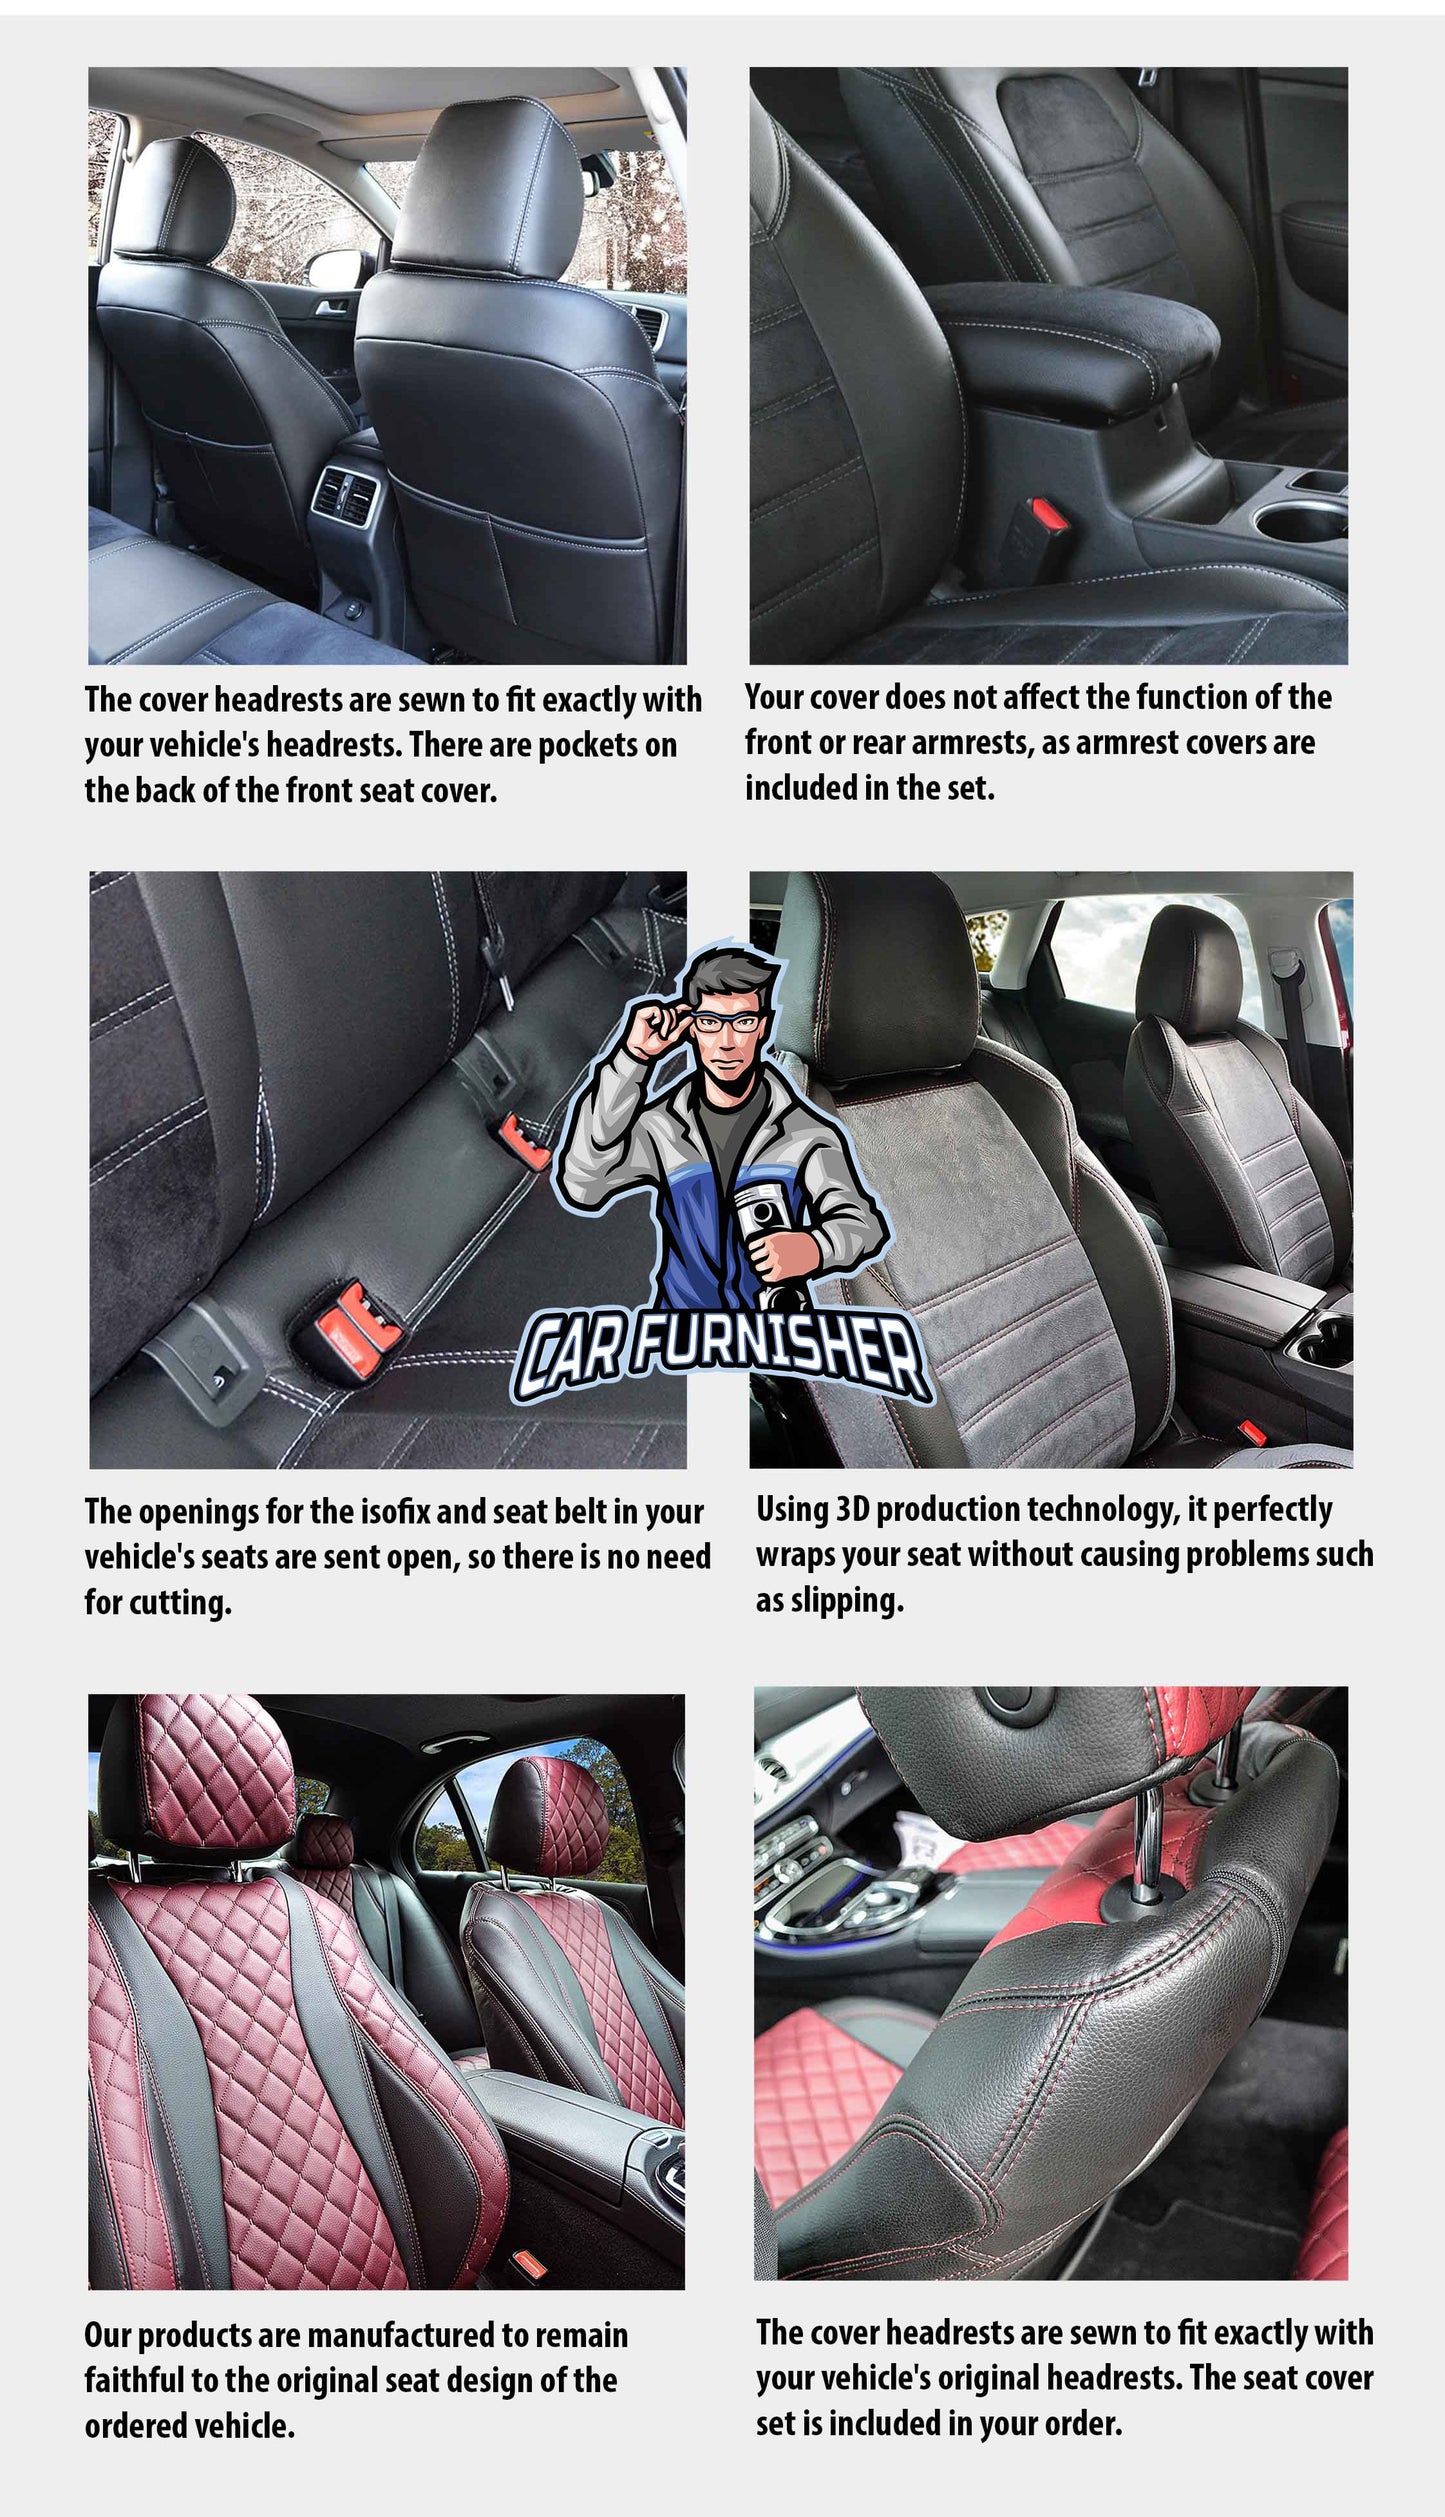 Daihatsu Materia Seat Covers London Foal Feather Design Beige Leather & Foal Feather